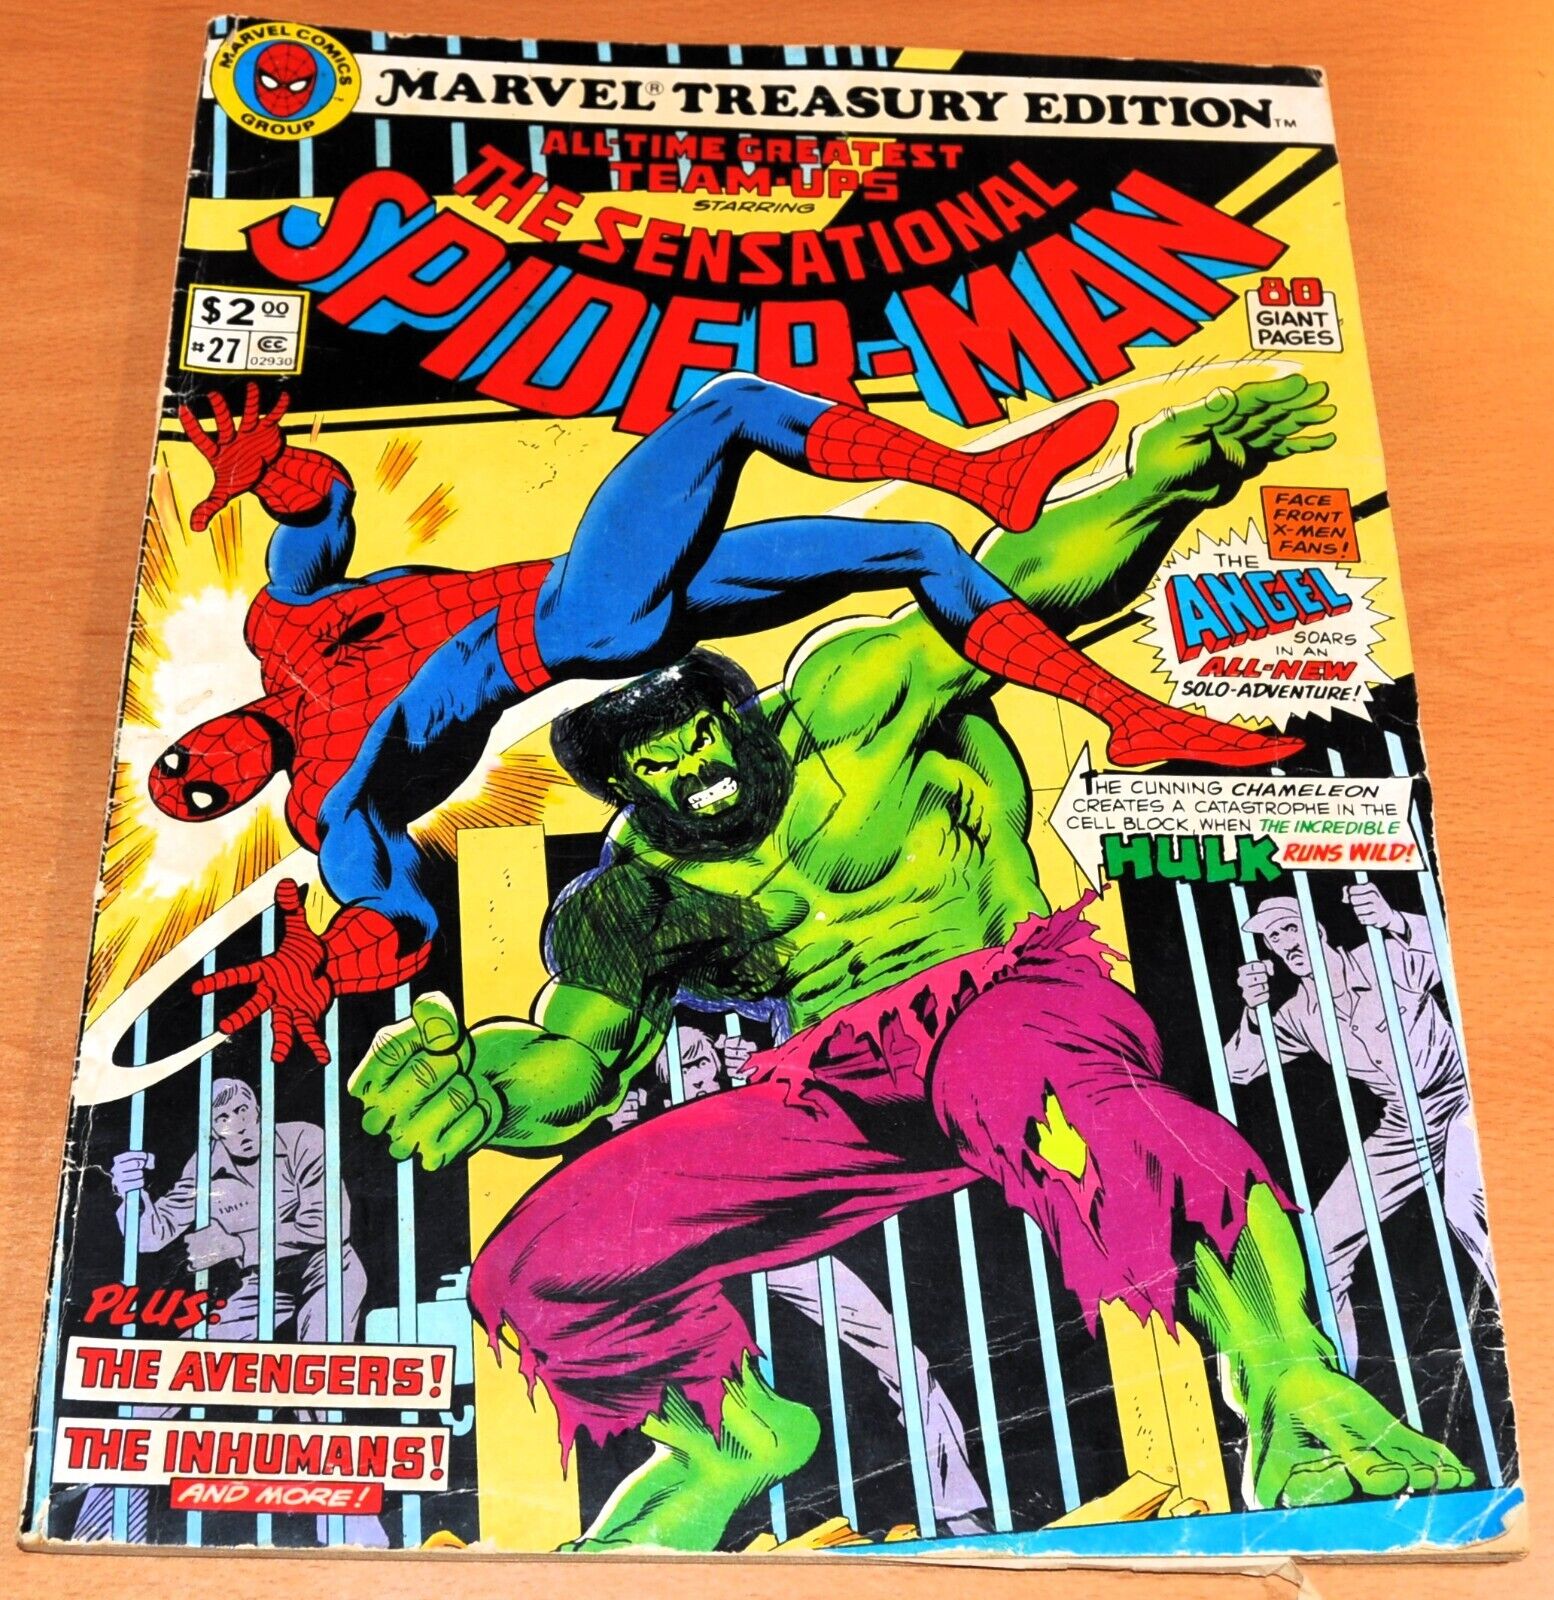 The Sensational Spider-Man #27 - Marvel Comics, 1980 - Marvel Treasury Edition